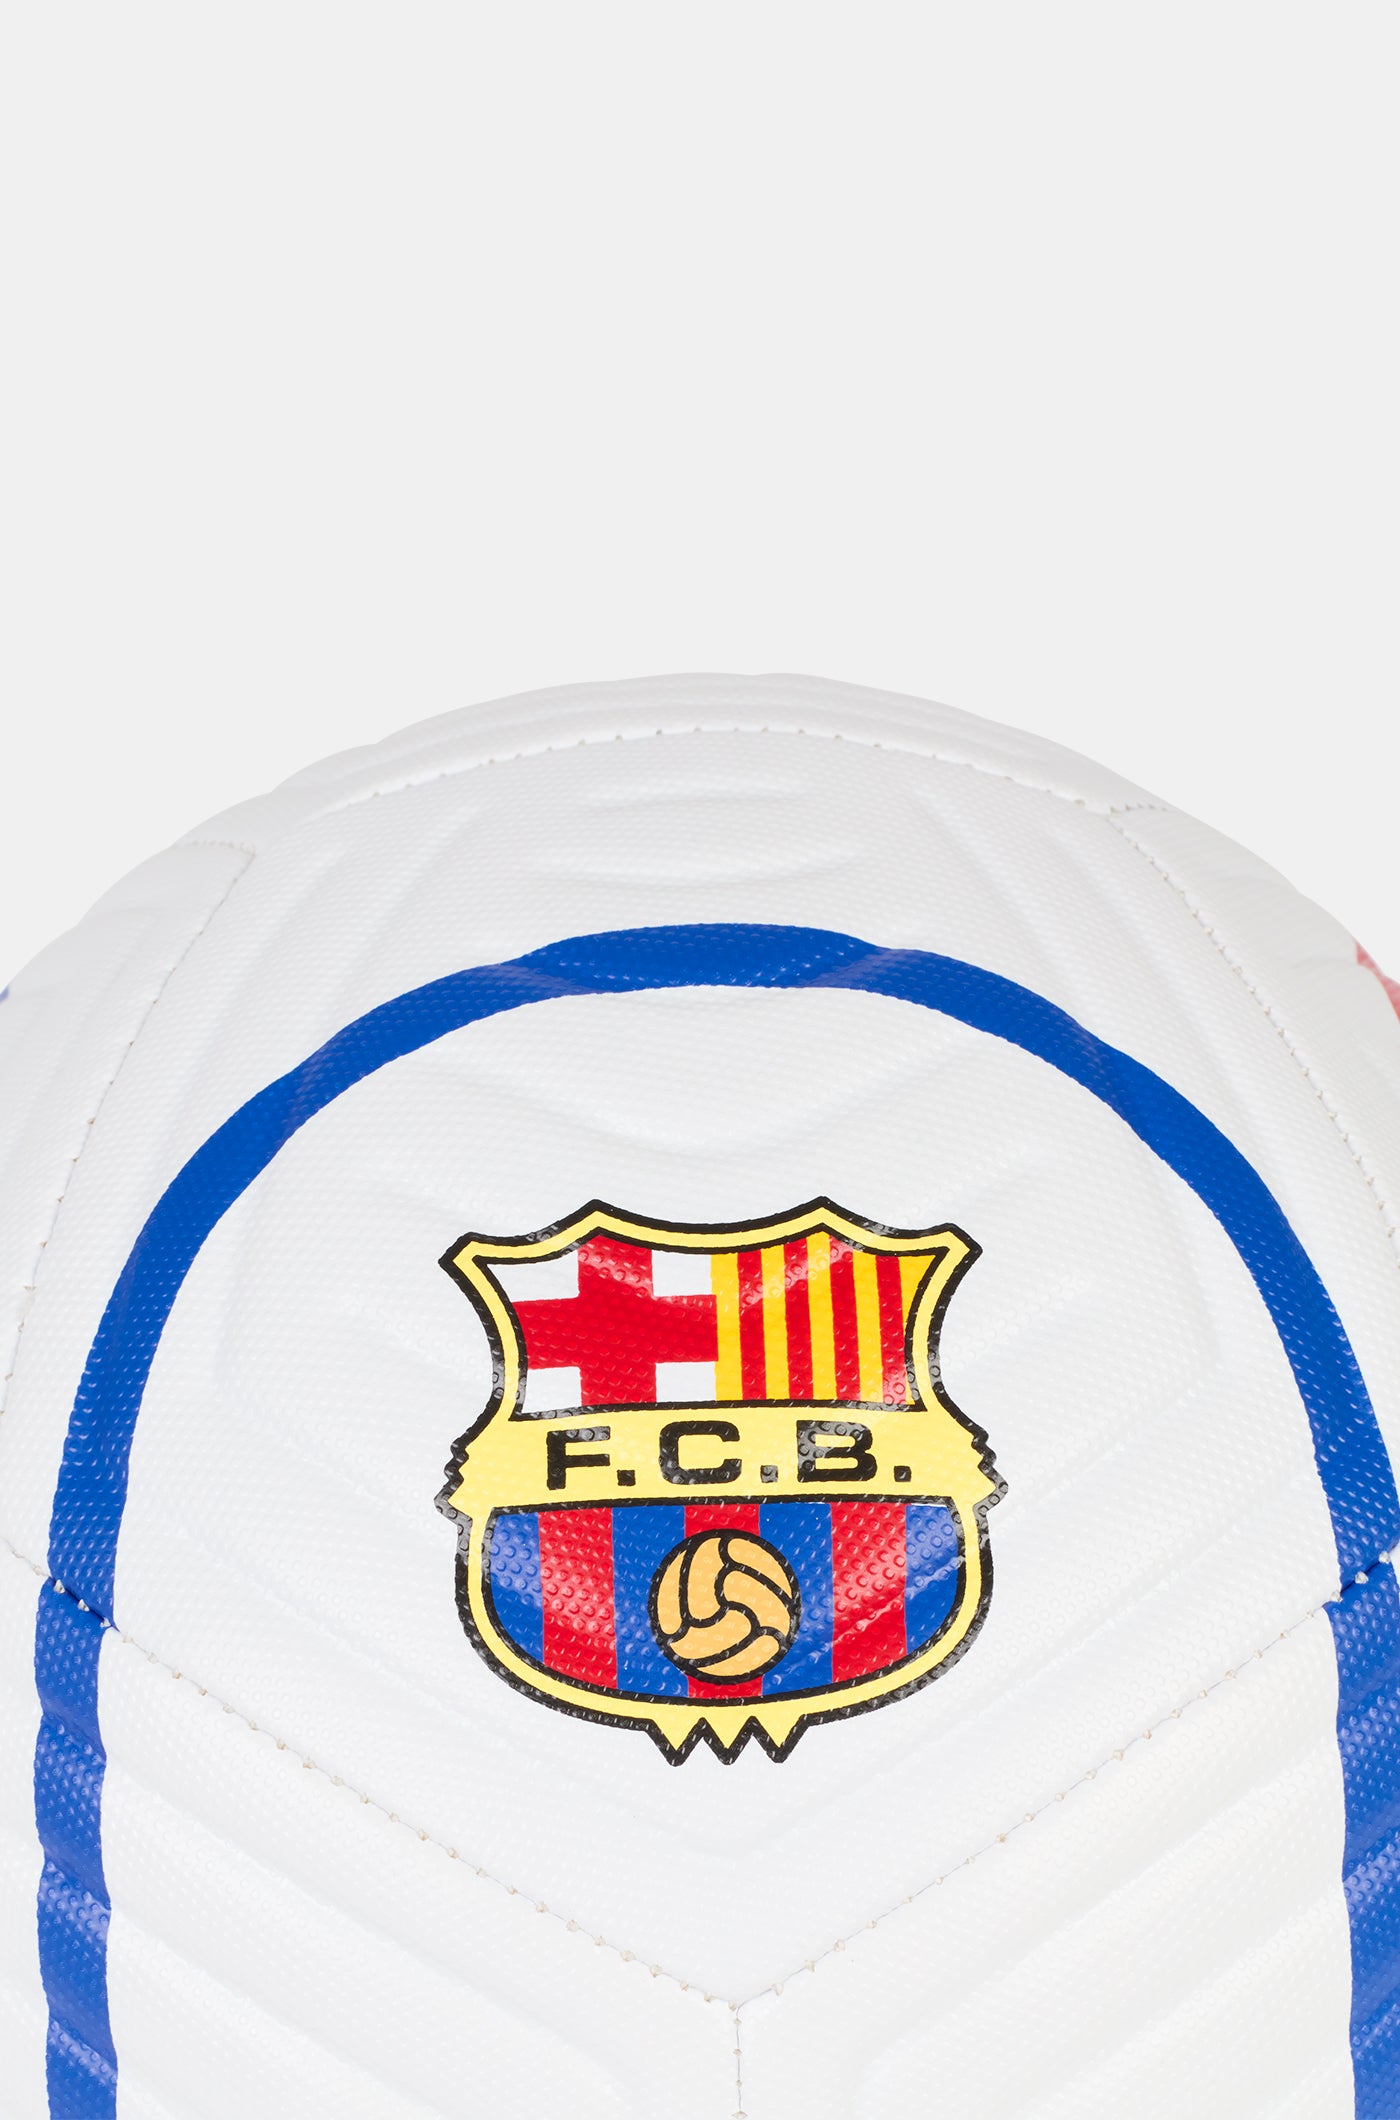 Ballon Domicile 23/24 Baça Nike – Barça Official Store Spotify Camp Nou